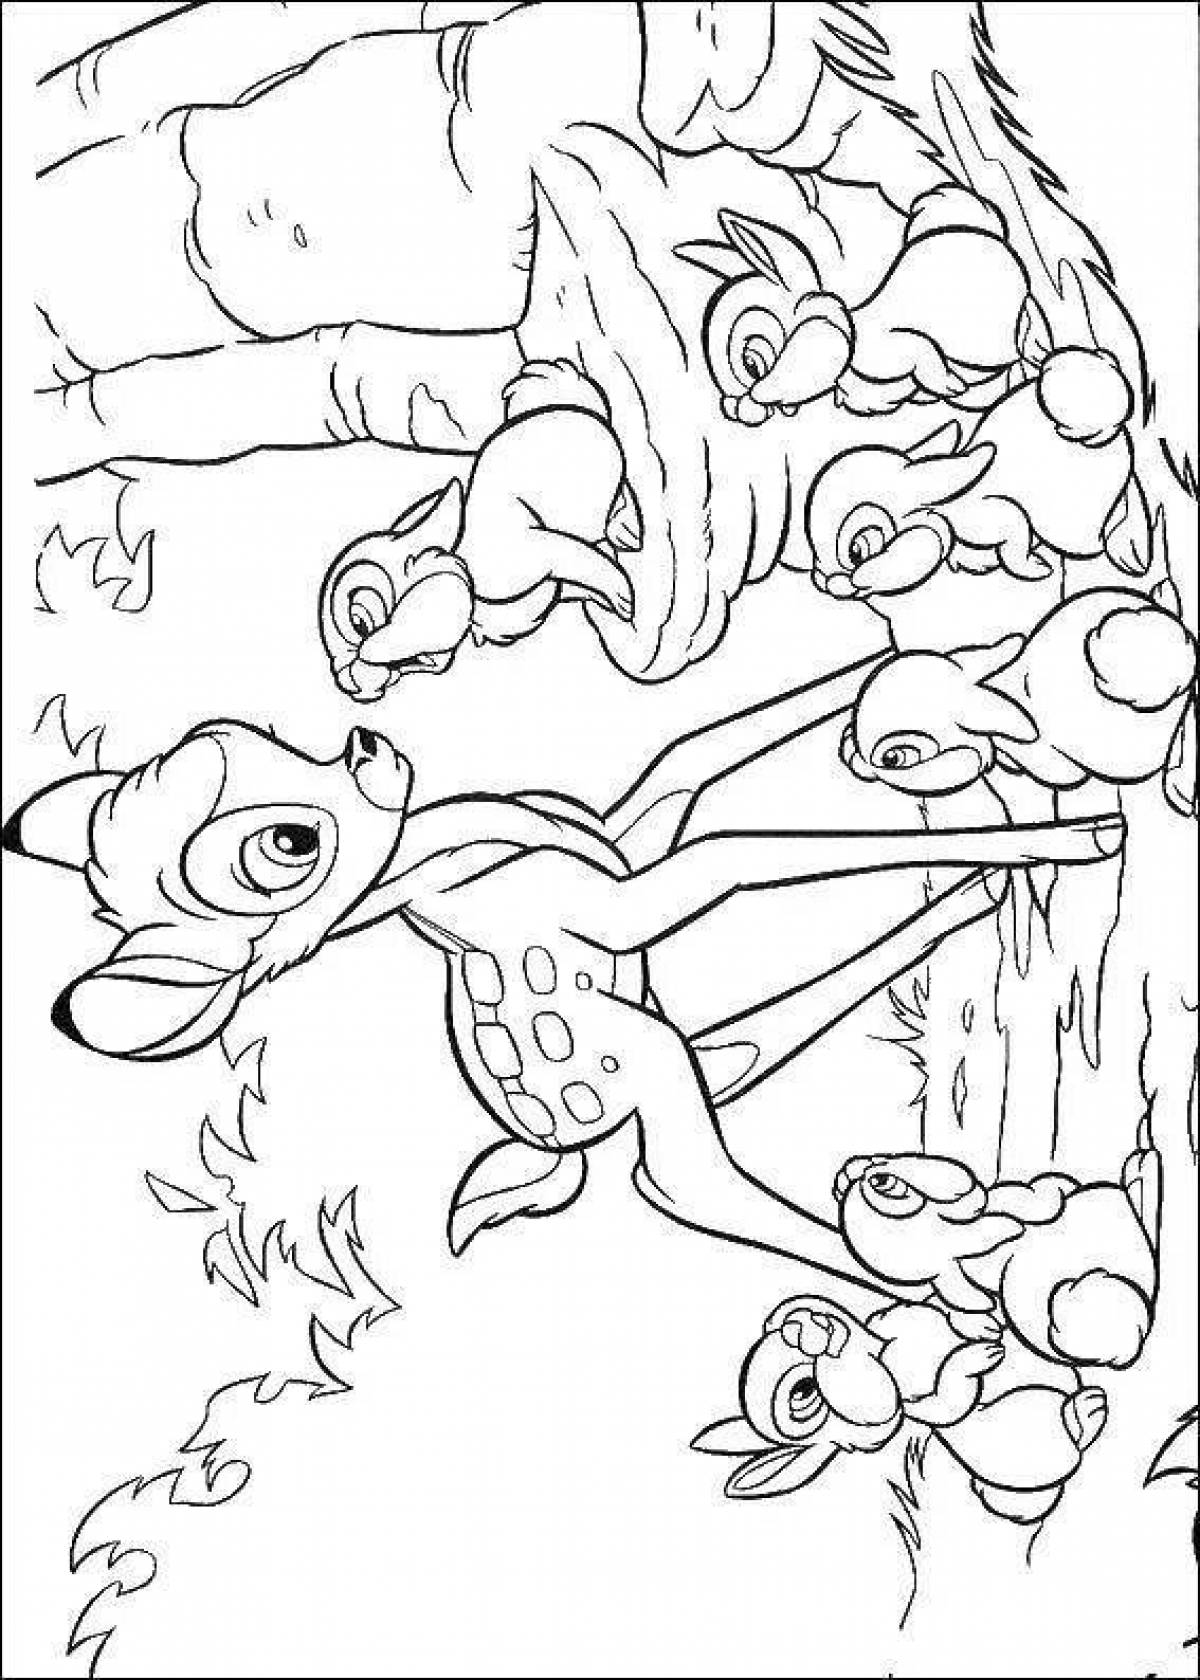 Charming katunket coloring book